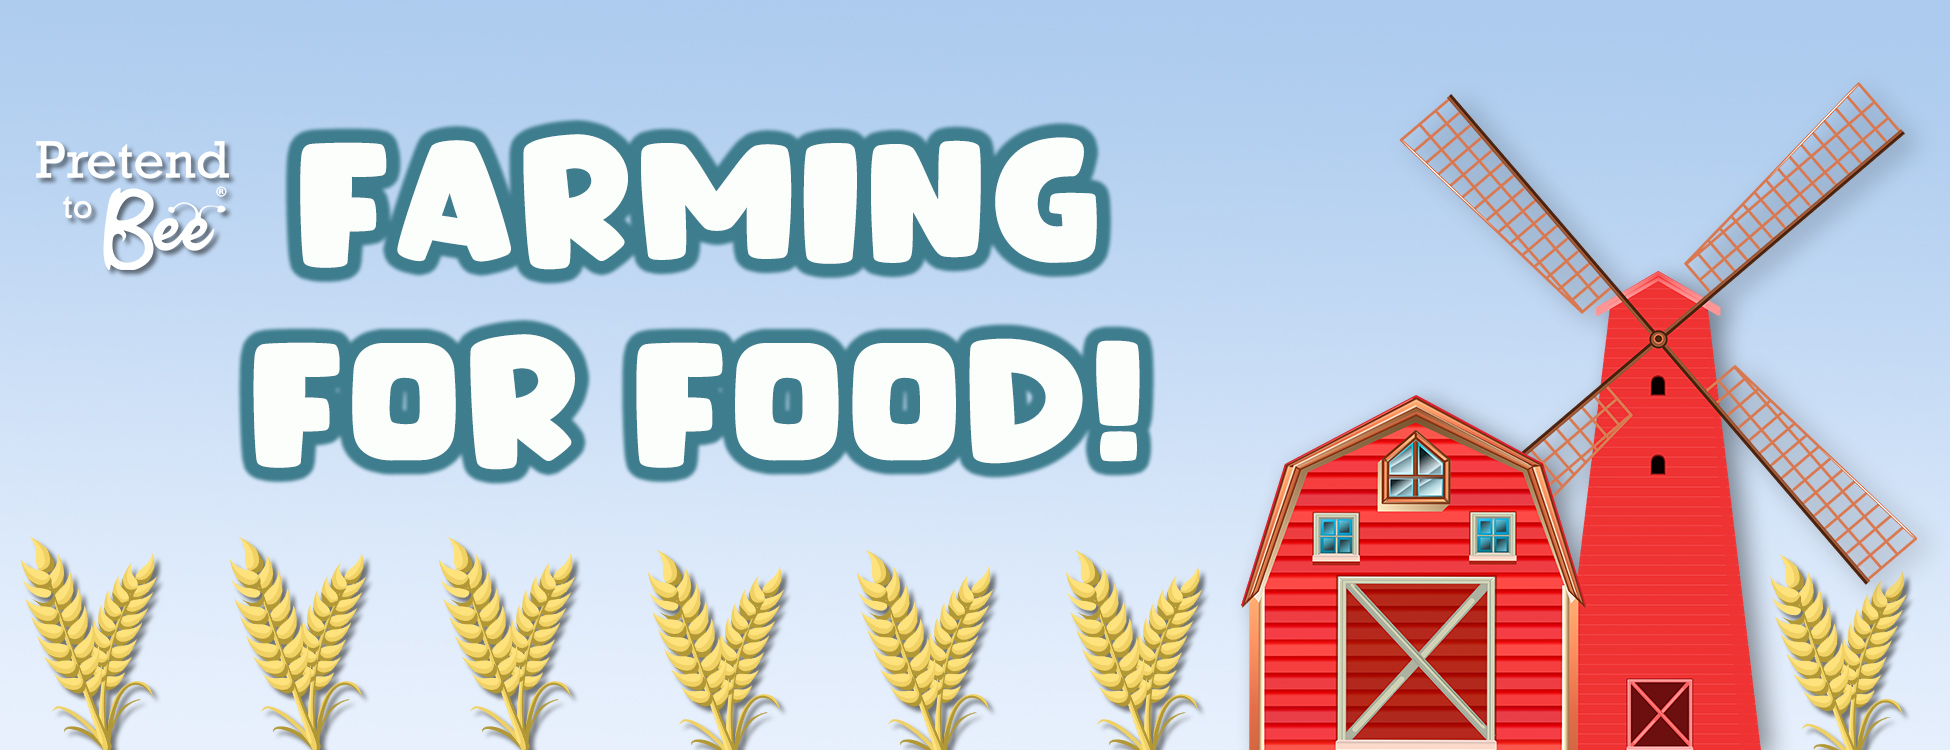 Farming For Food!